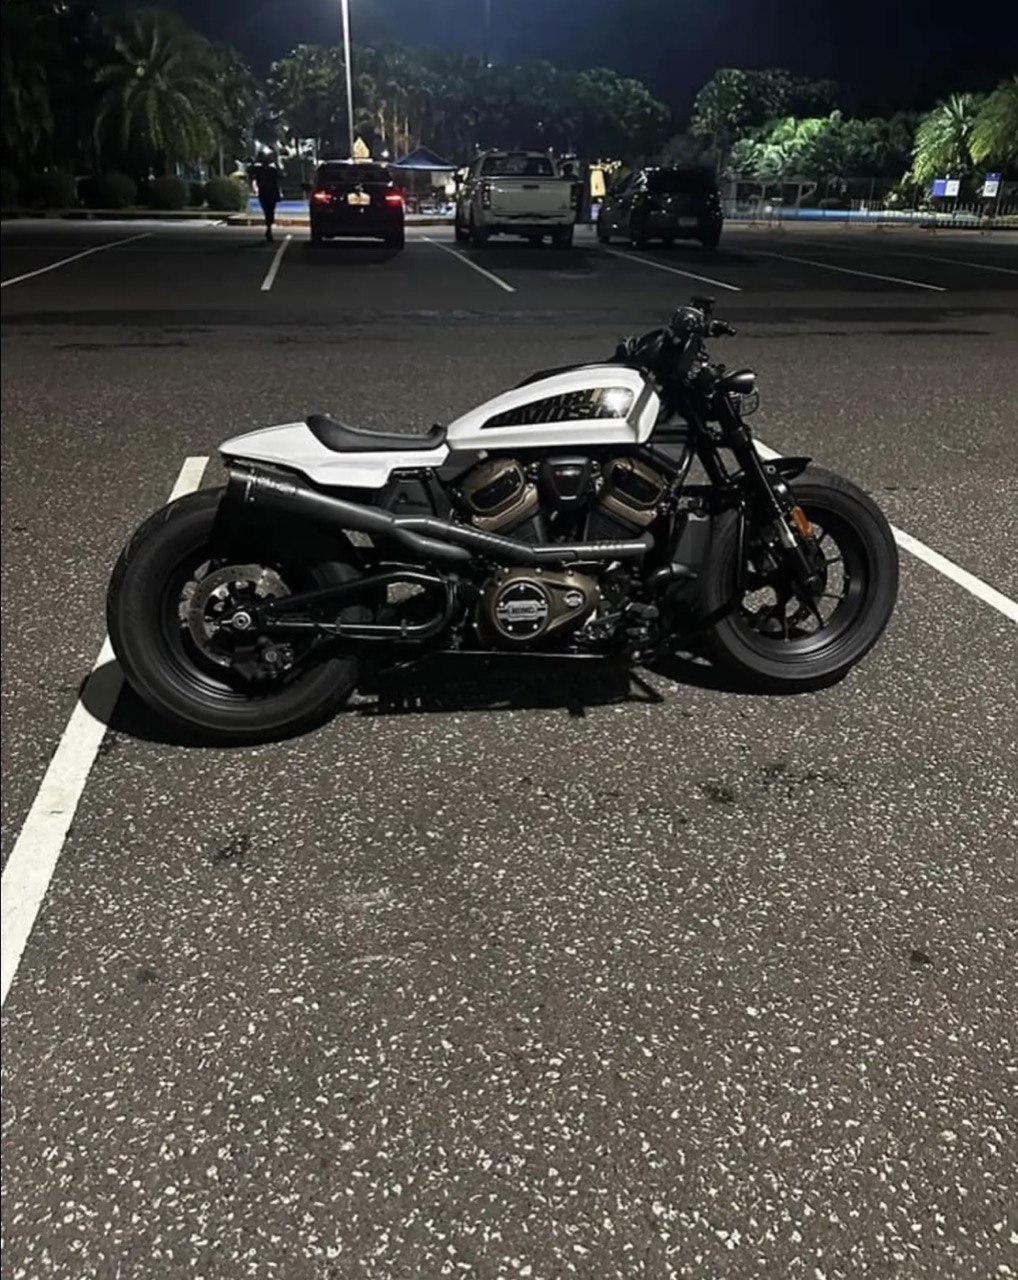 Дополнительное изображение Harley Davidson Sportster S 2022 clqreyr6n8zzr0b15nn24wwid